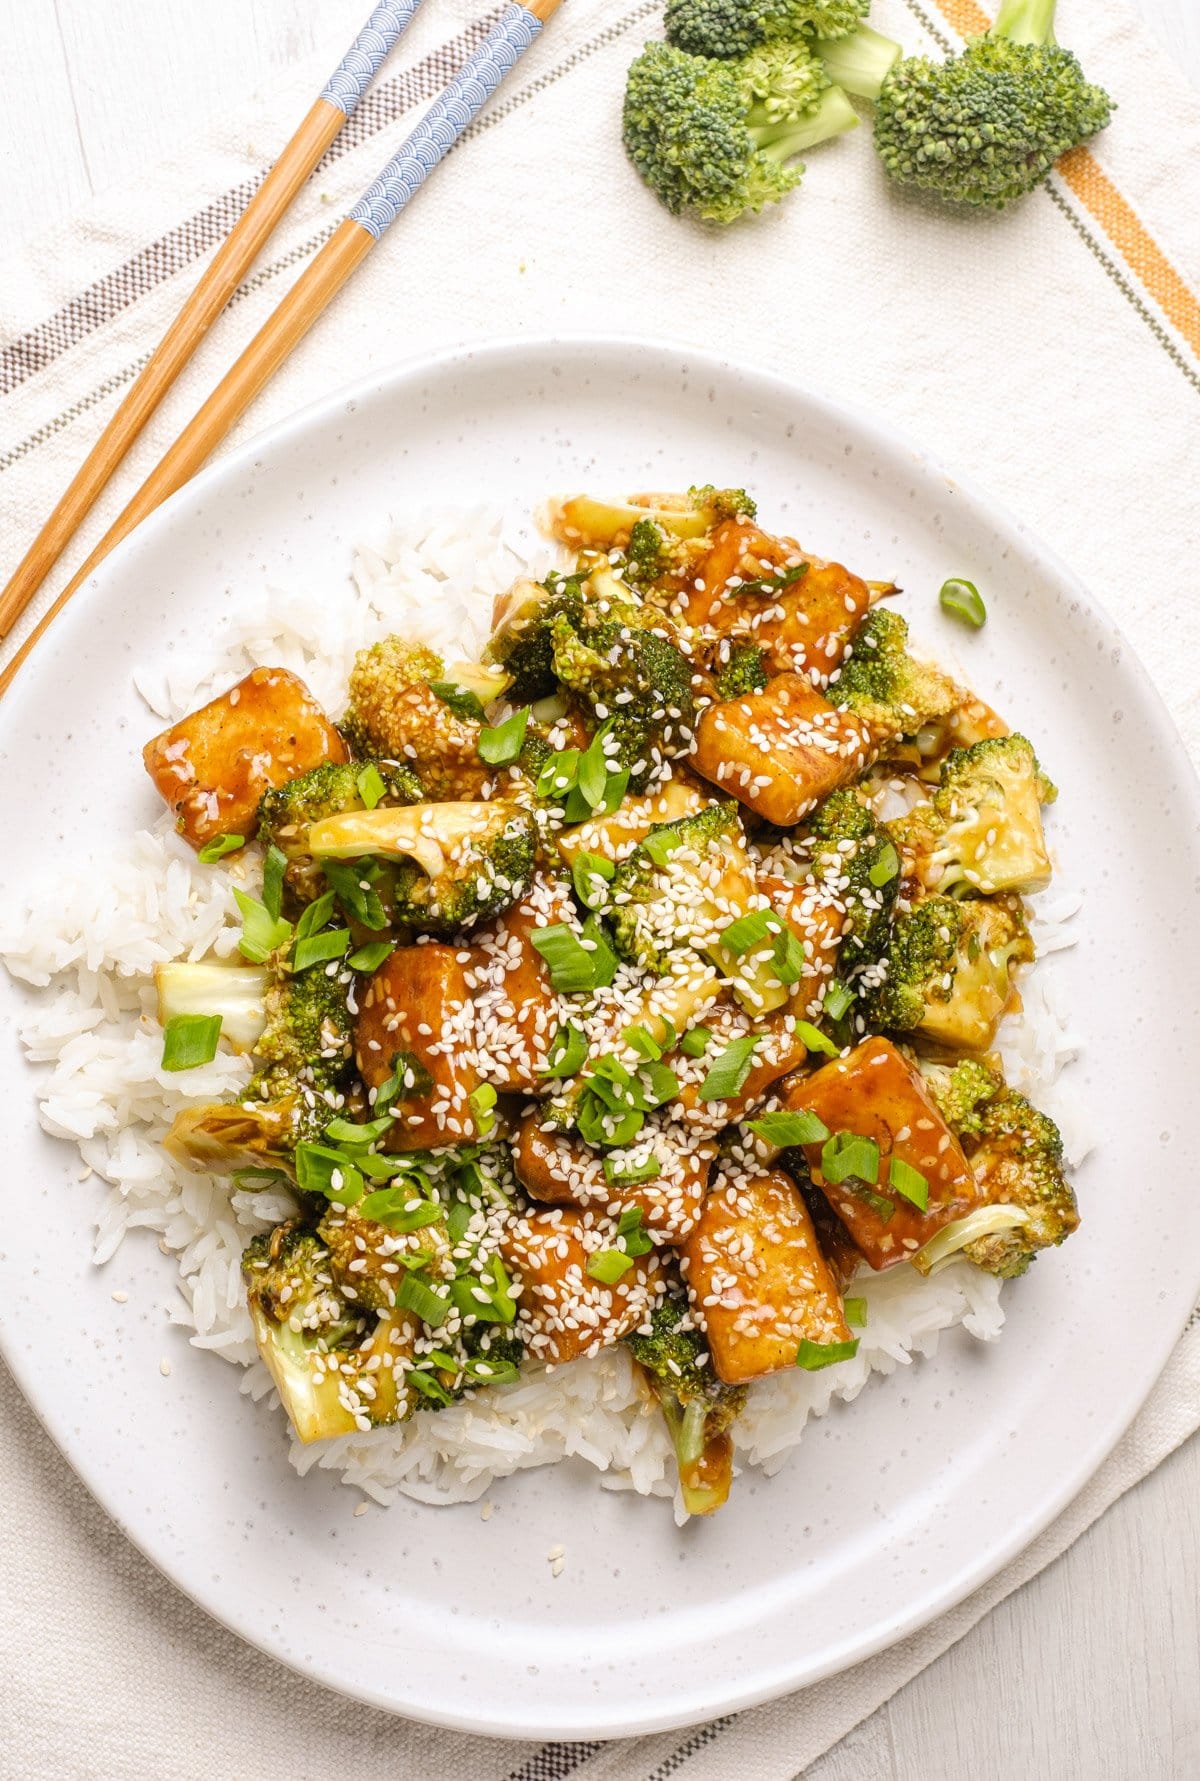 Tofu Broccoli Stir Fry Recipe topped with sesame seeds